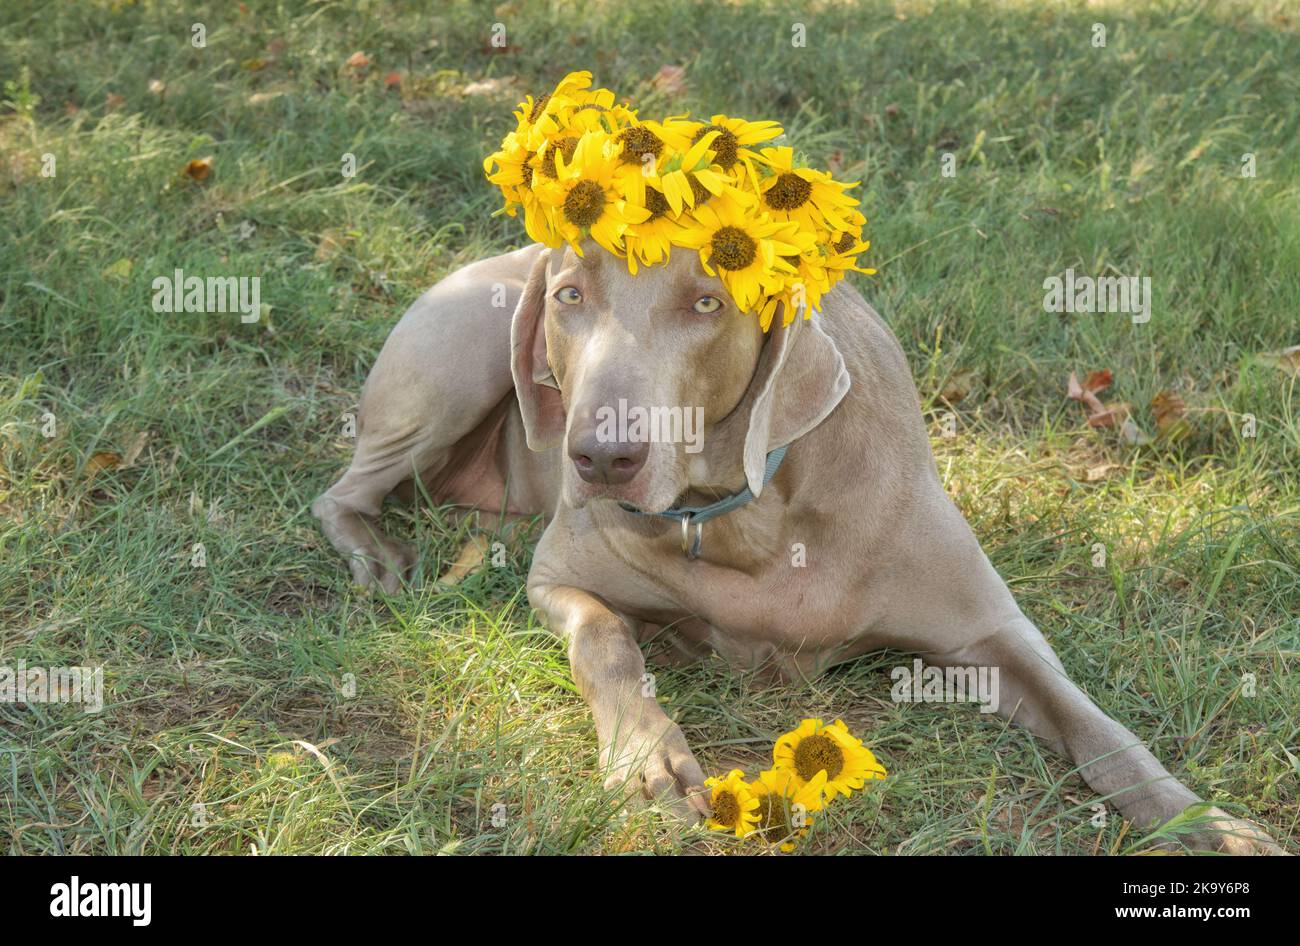 Beautiful Weimaraner dog lying in grass, wearing a wreath made of sunflowers Stock Photo